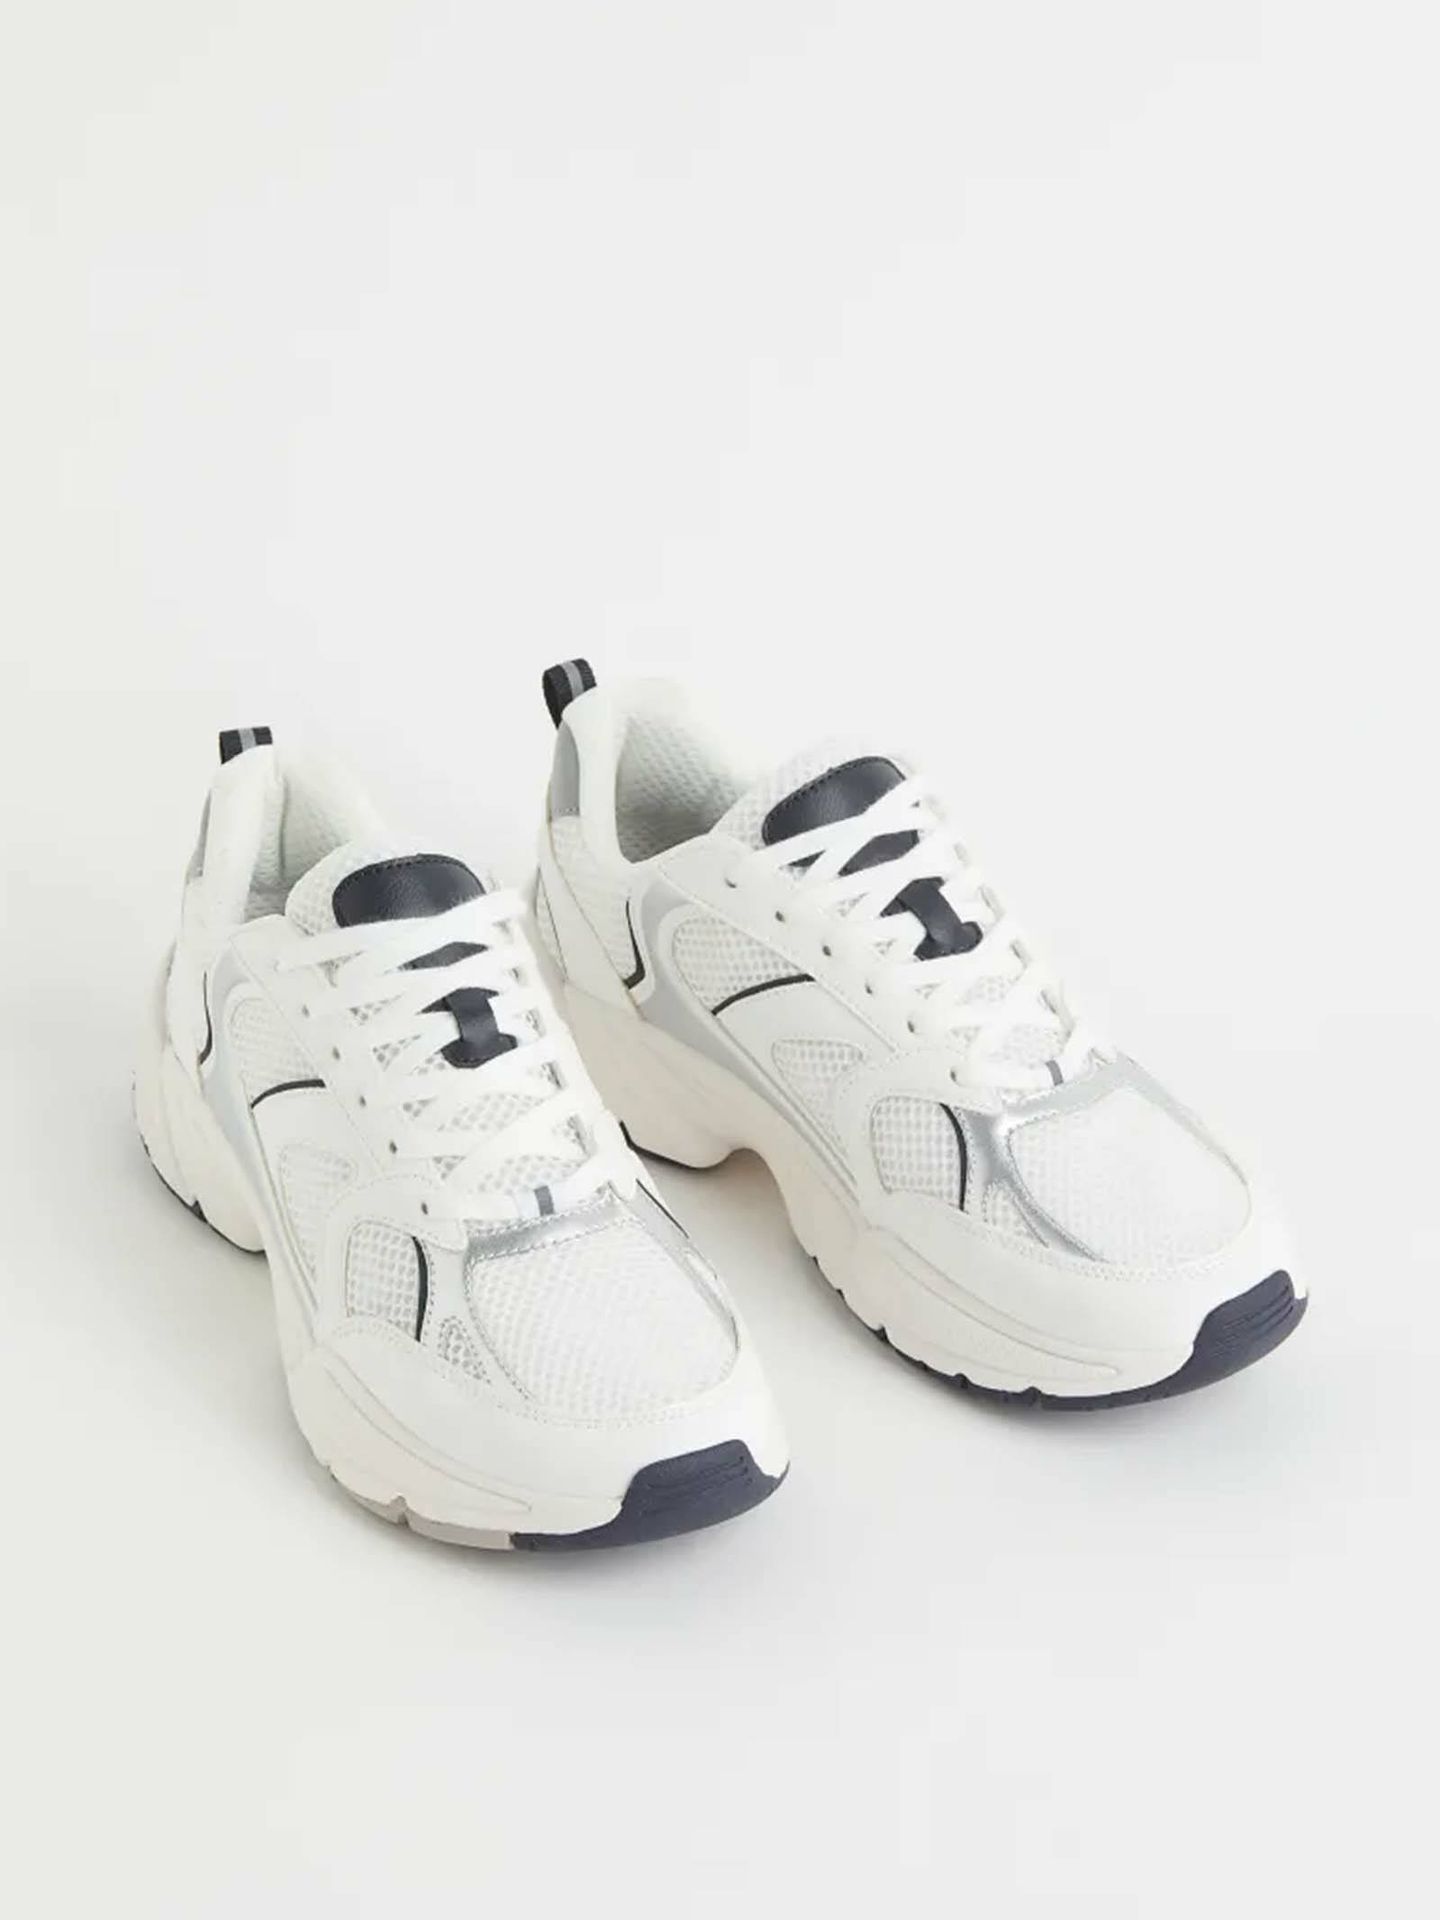 5 zapatillas de deporte blancas por menos de 50 euros